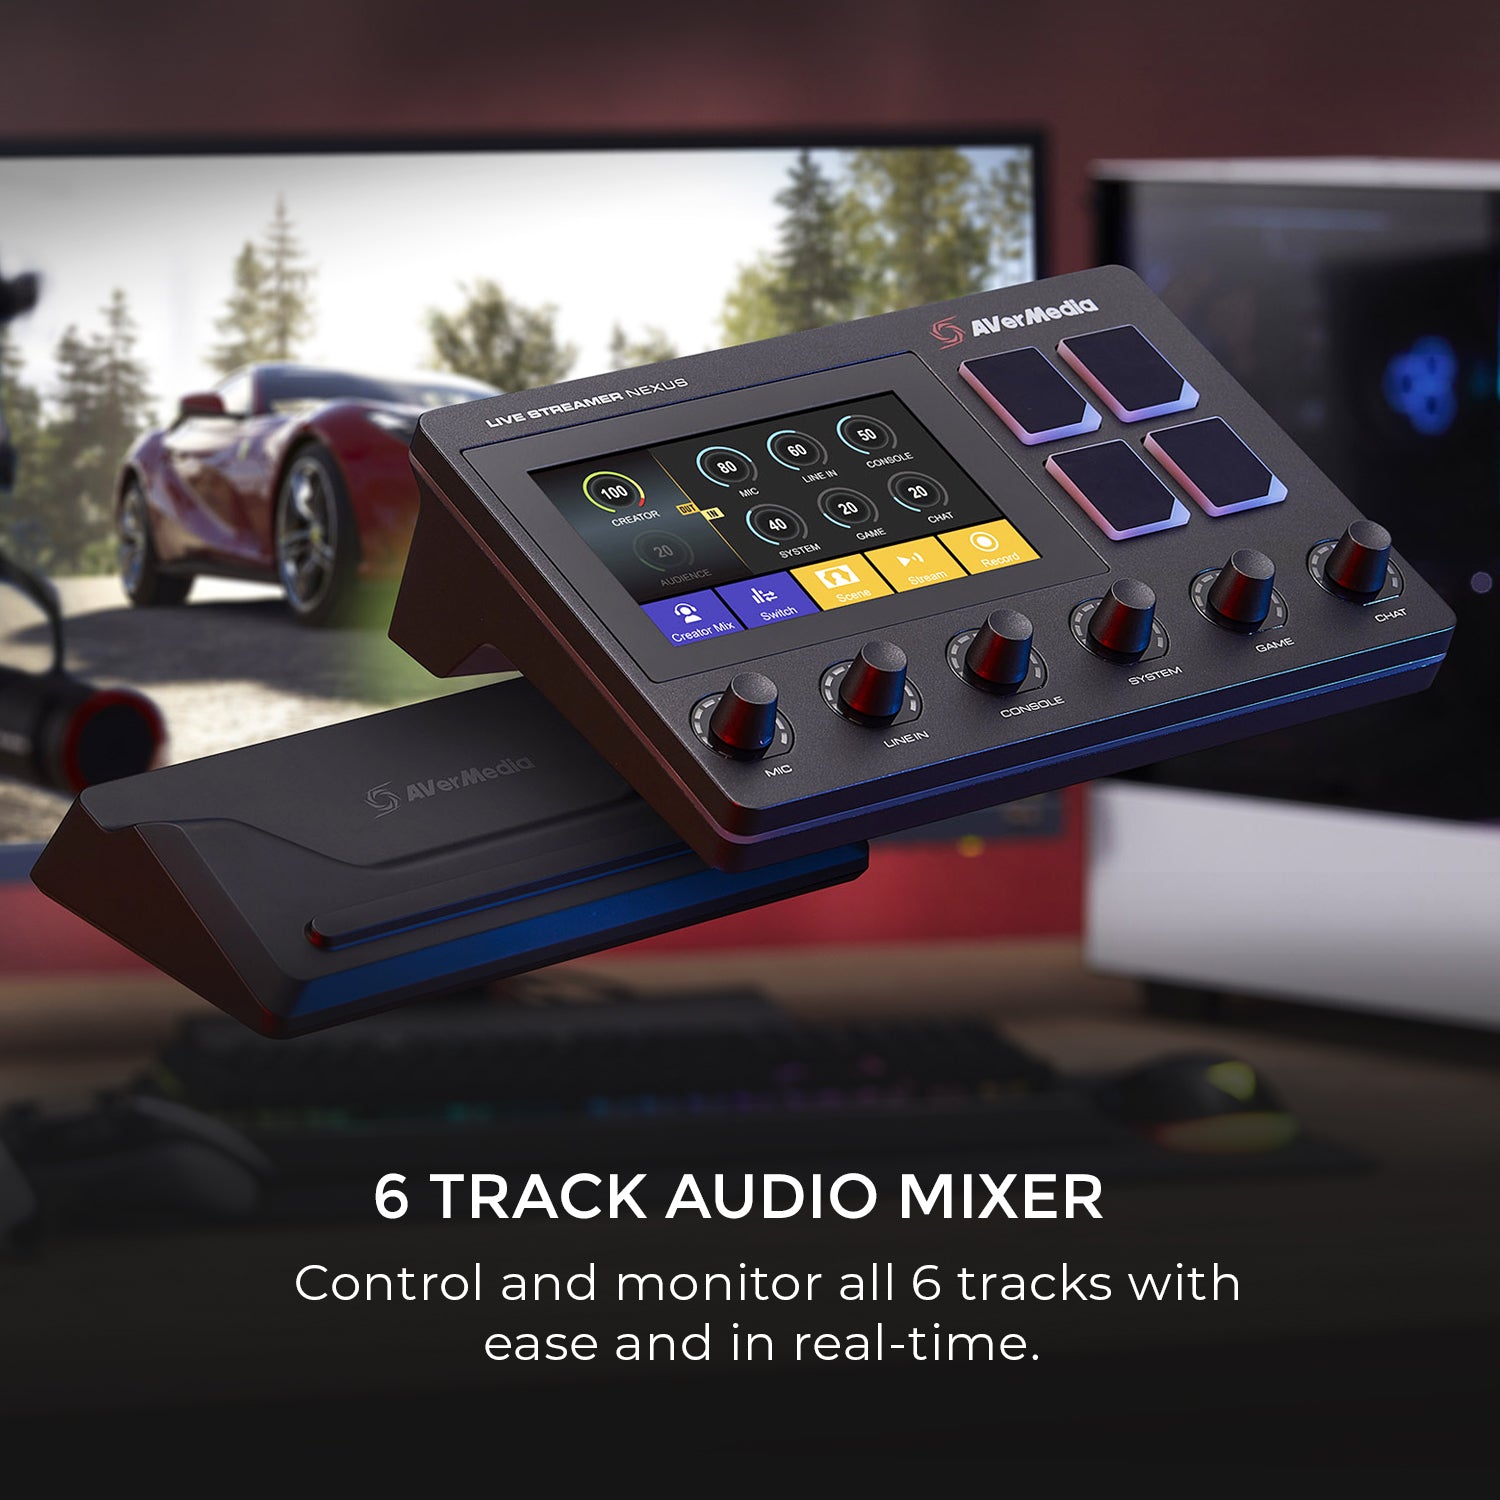 AX310 Creator's Control Center for Streamers | AVerMedia 